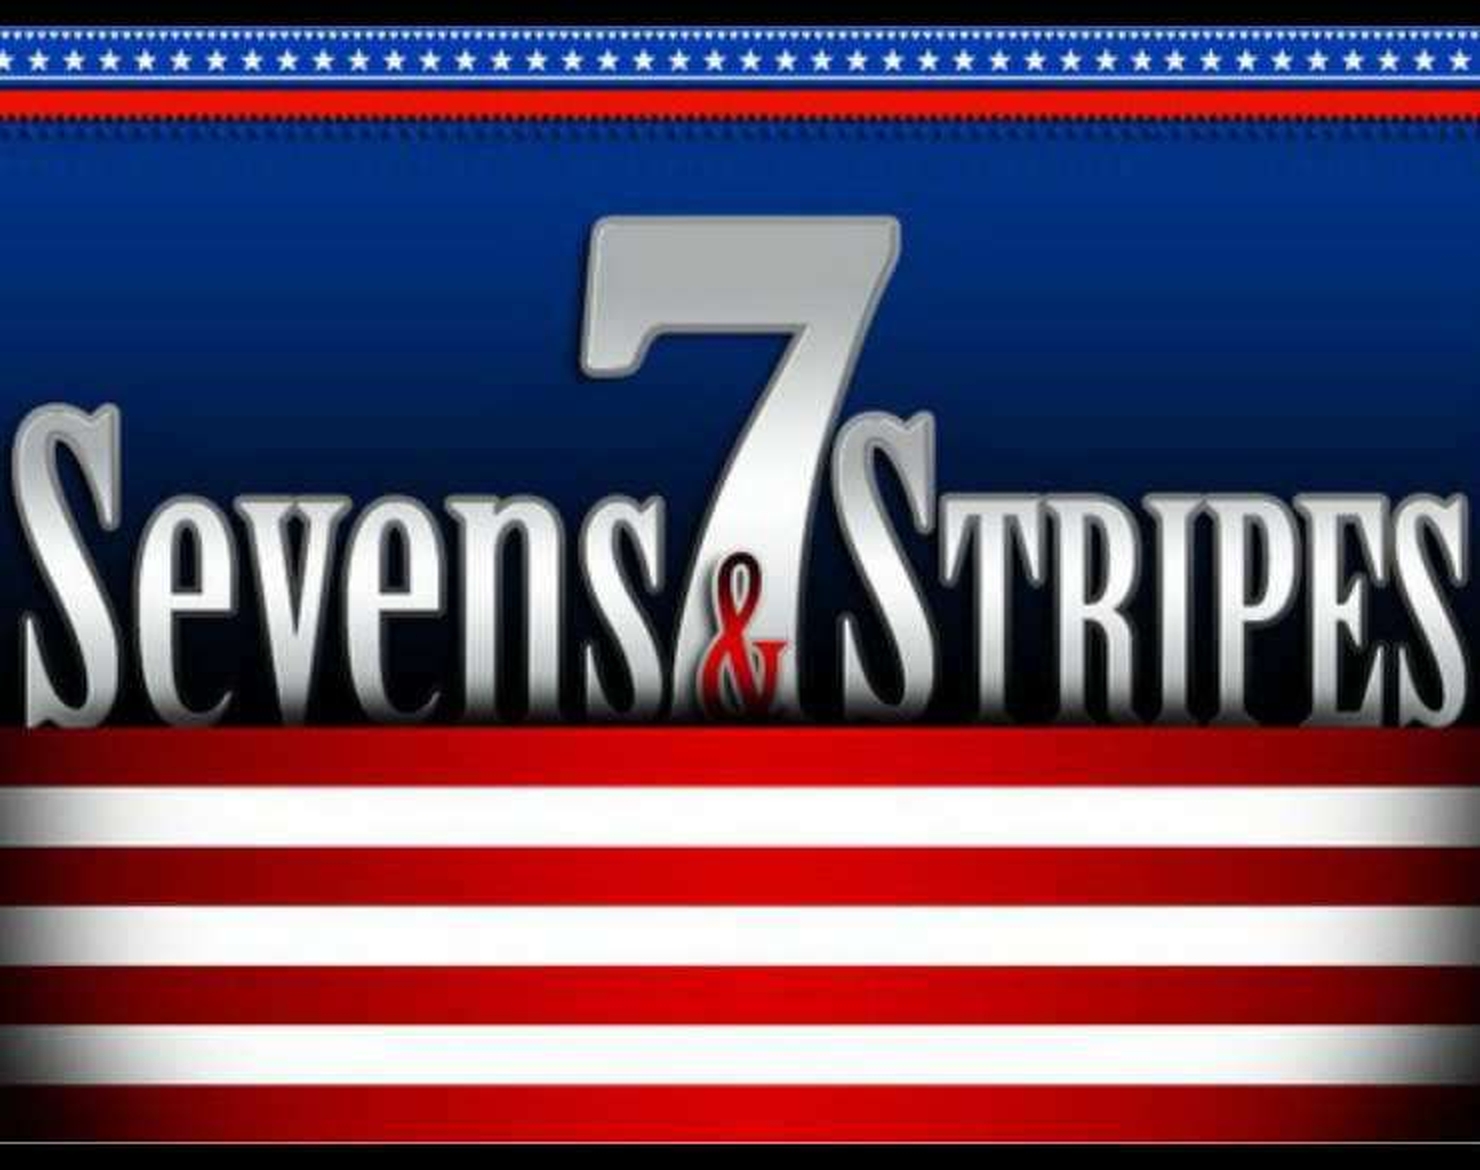 Sevens & Stripes demo